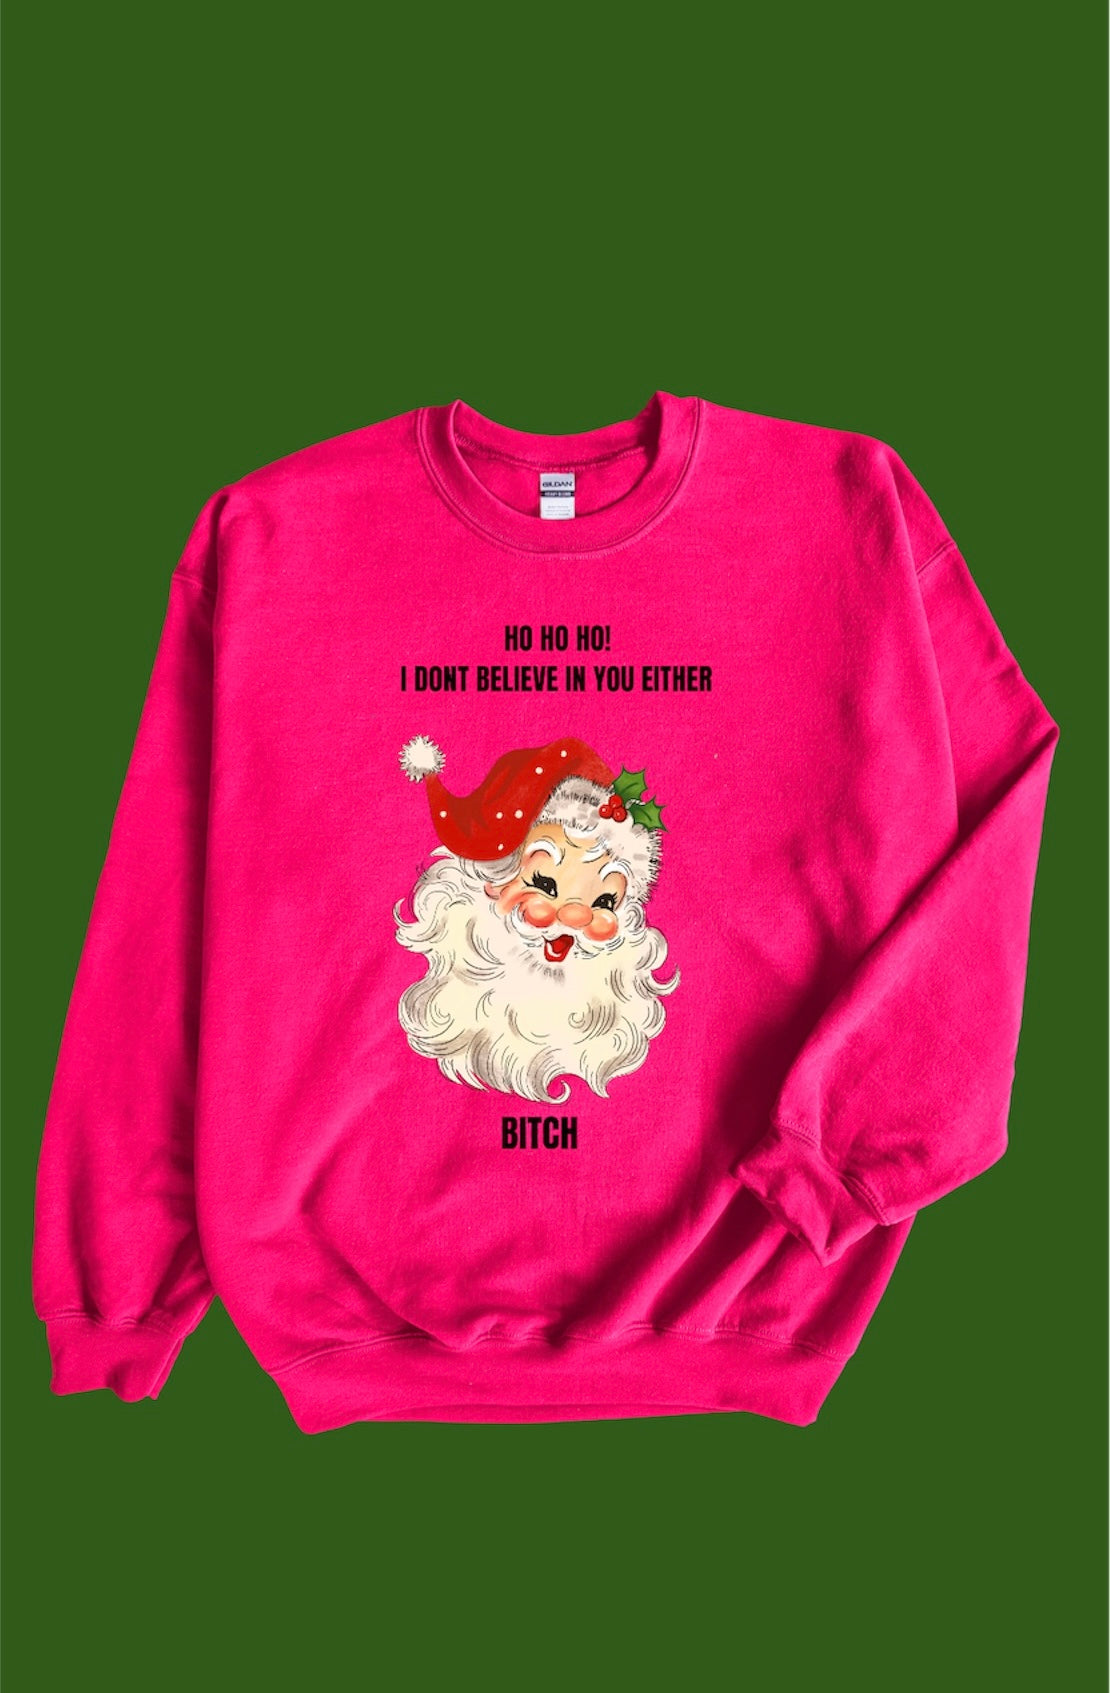 Ho ho ho I don’t believe in you either sweatshirt